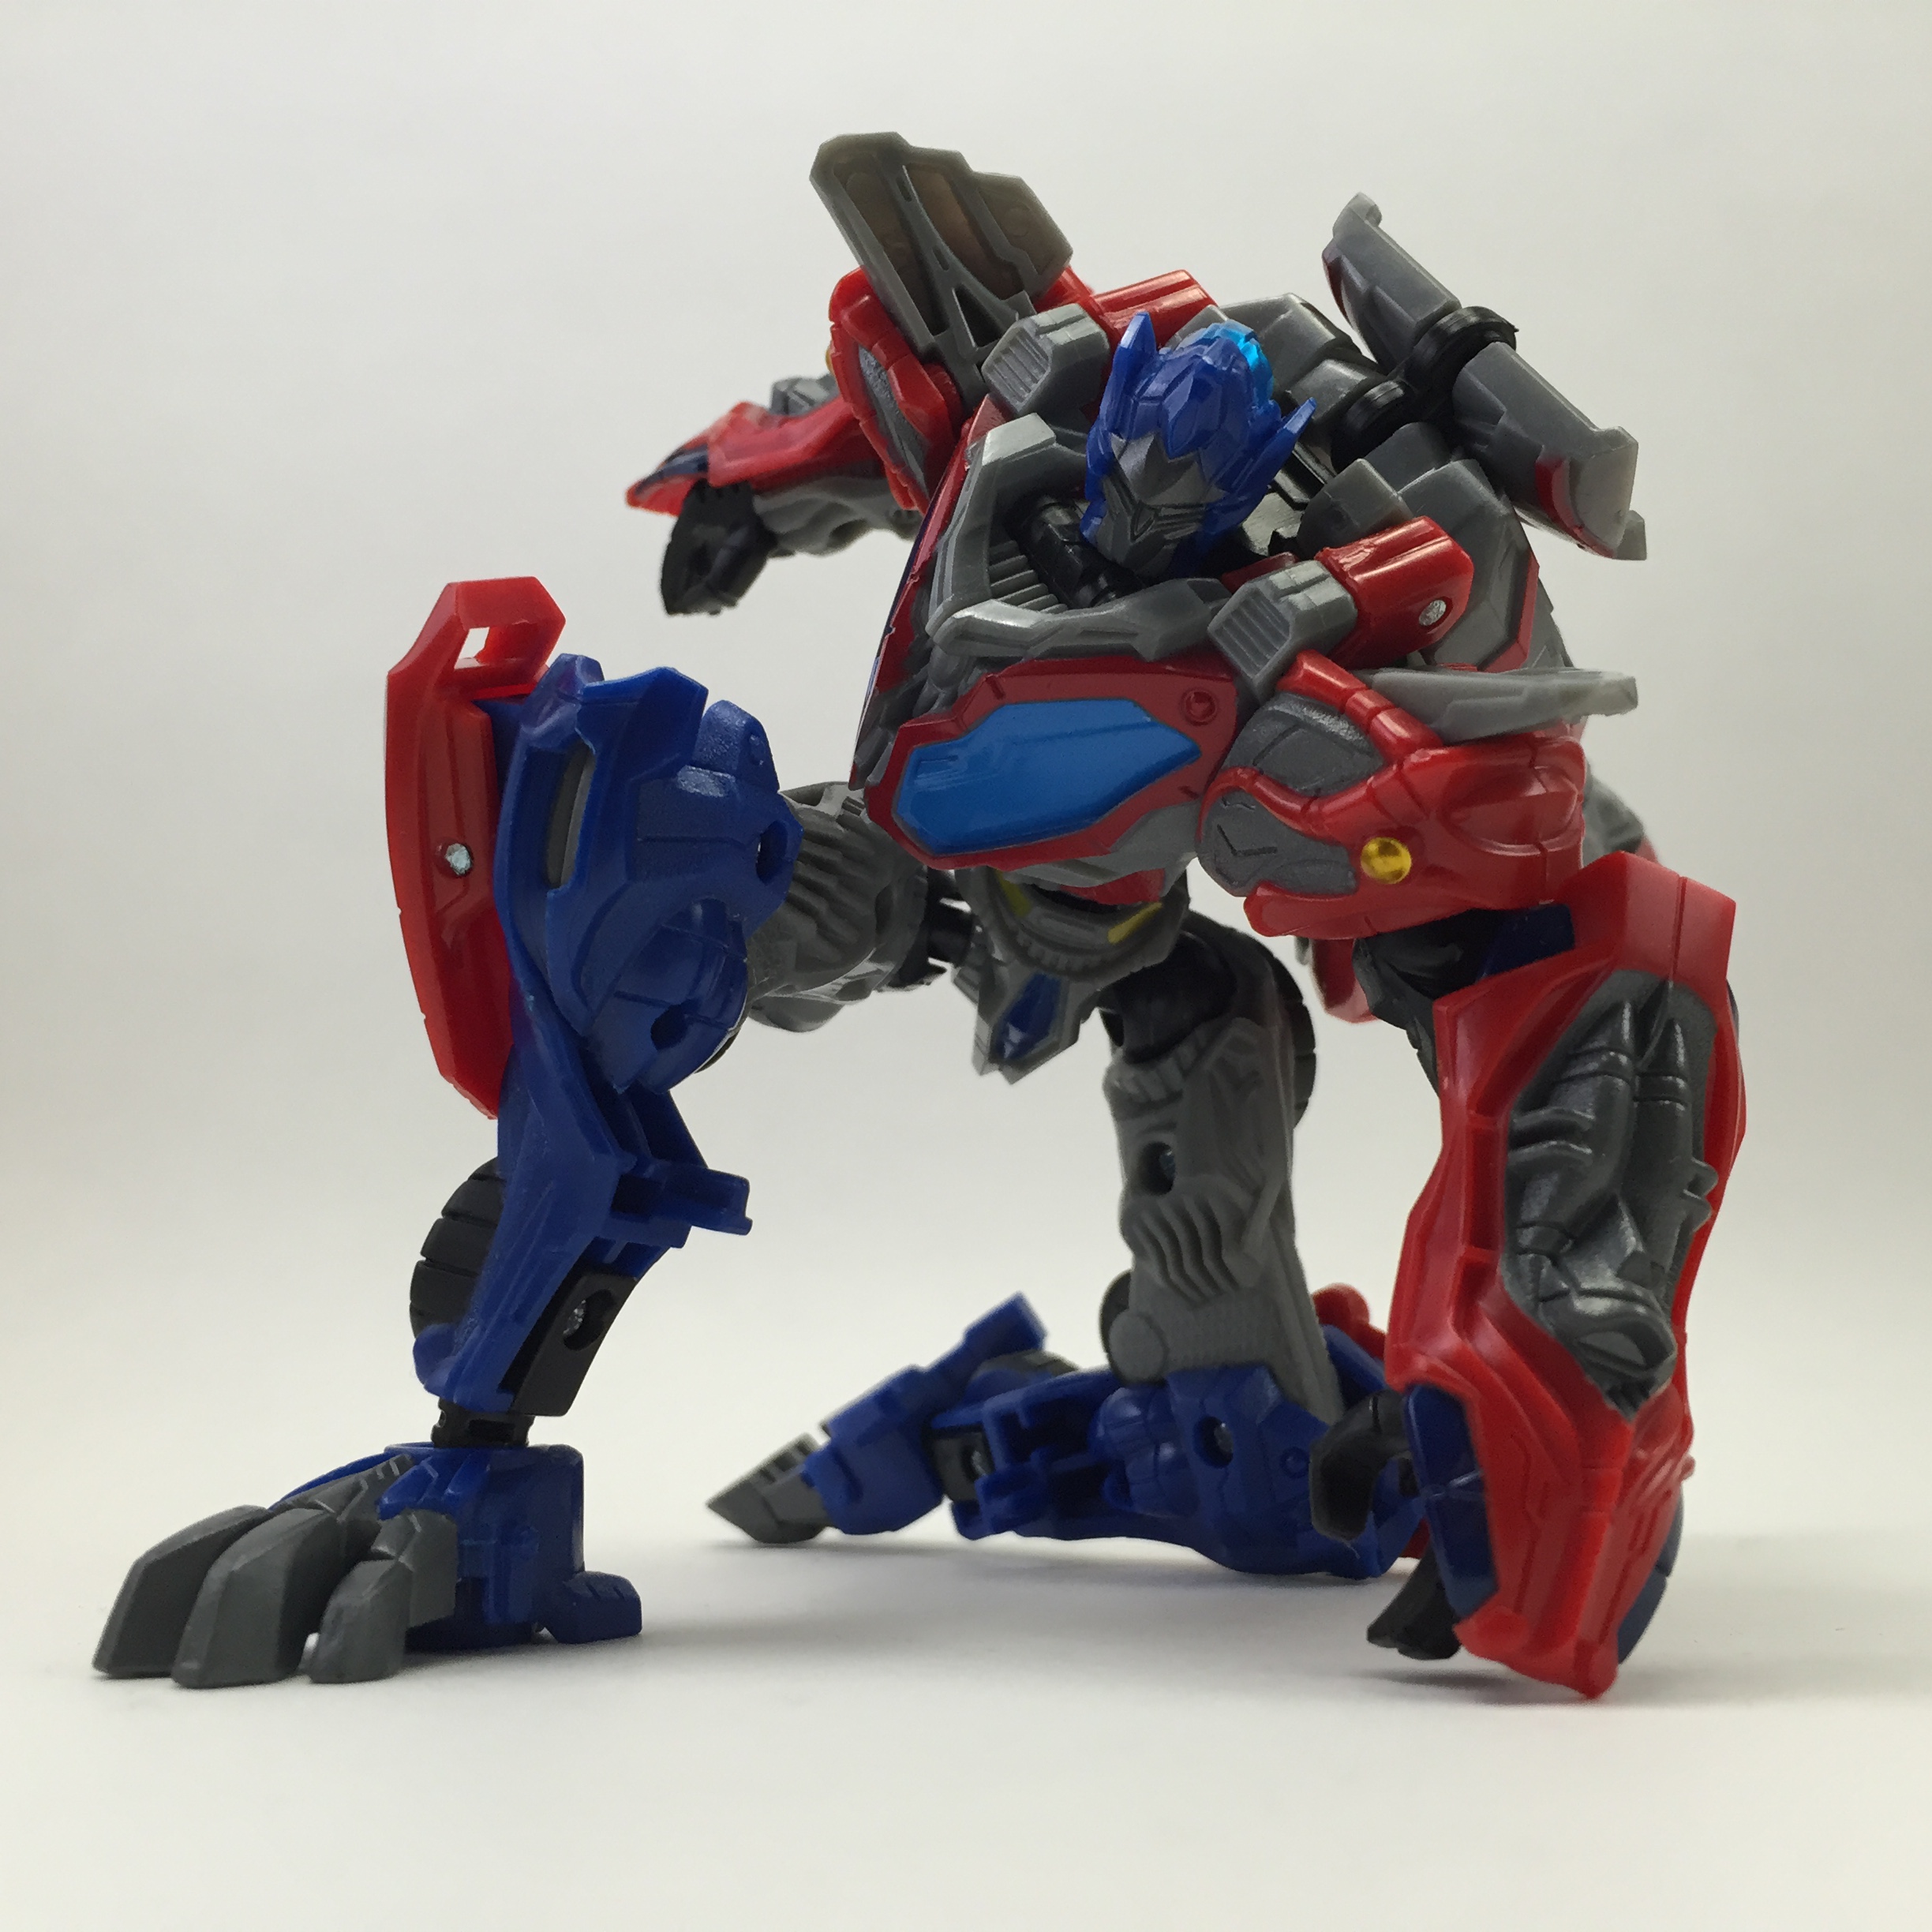 Review: Transformers Movie Advanced Protoform Optimus Prime